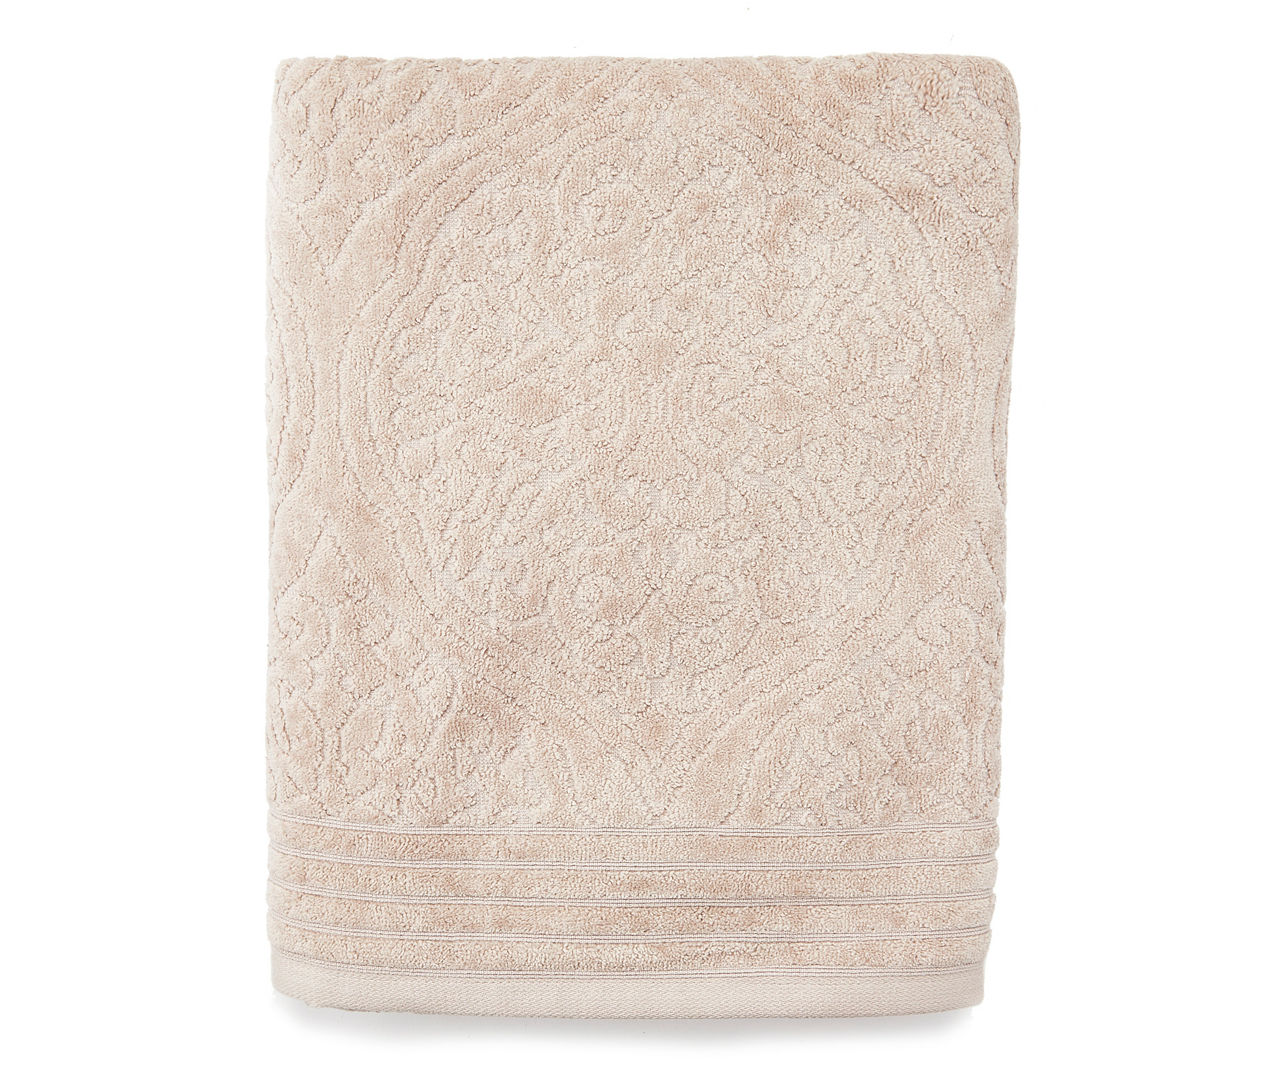 Broyhill Egyptian Cotton Towel